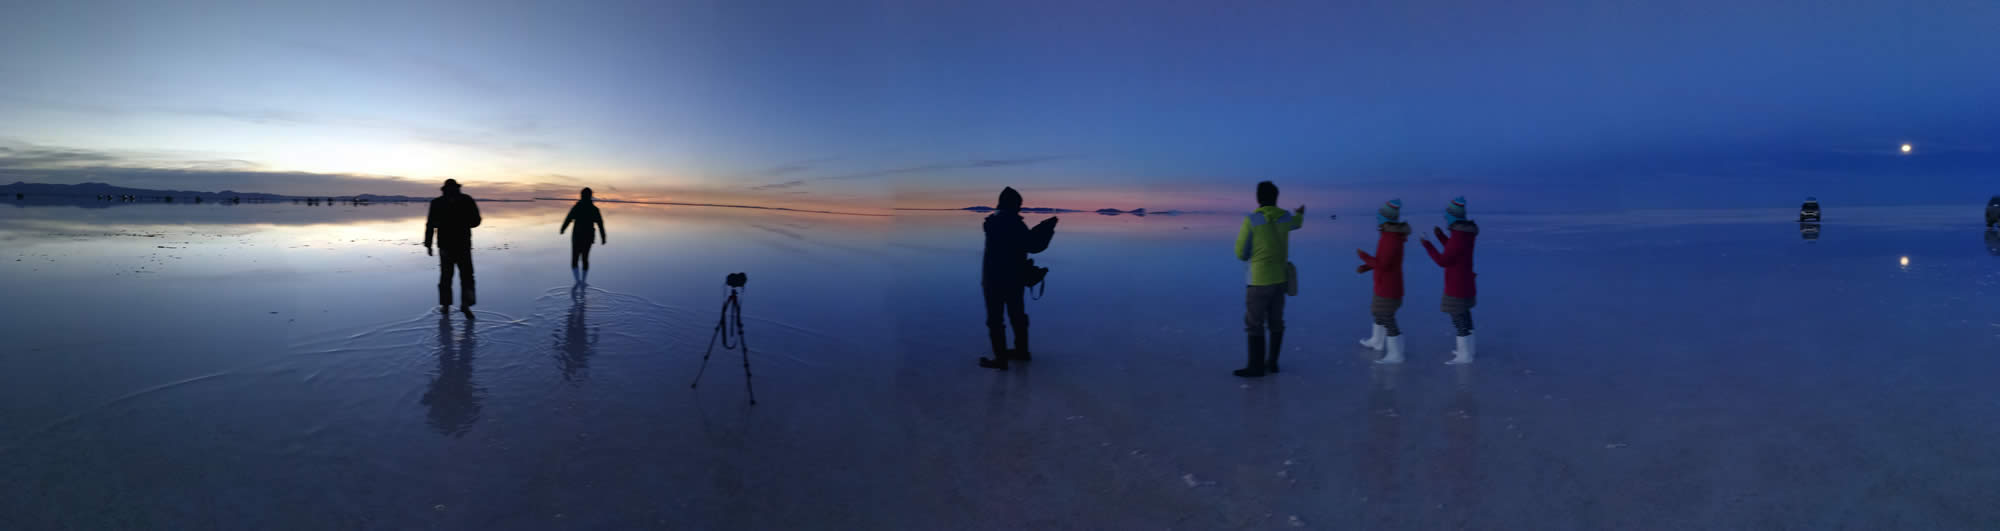 Salt Flats Bolivia Sunset 2020